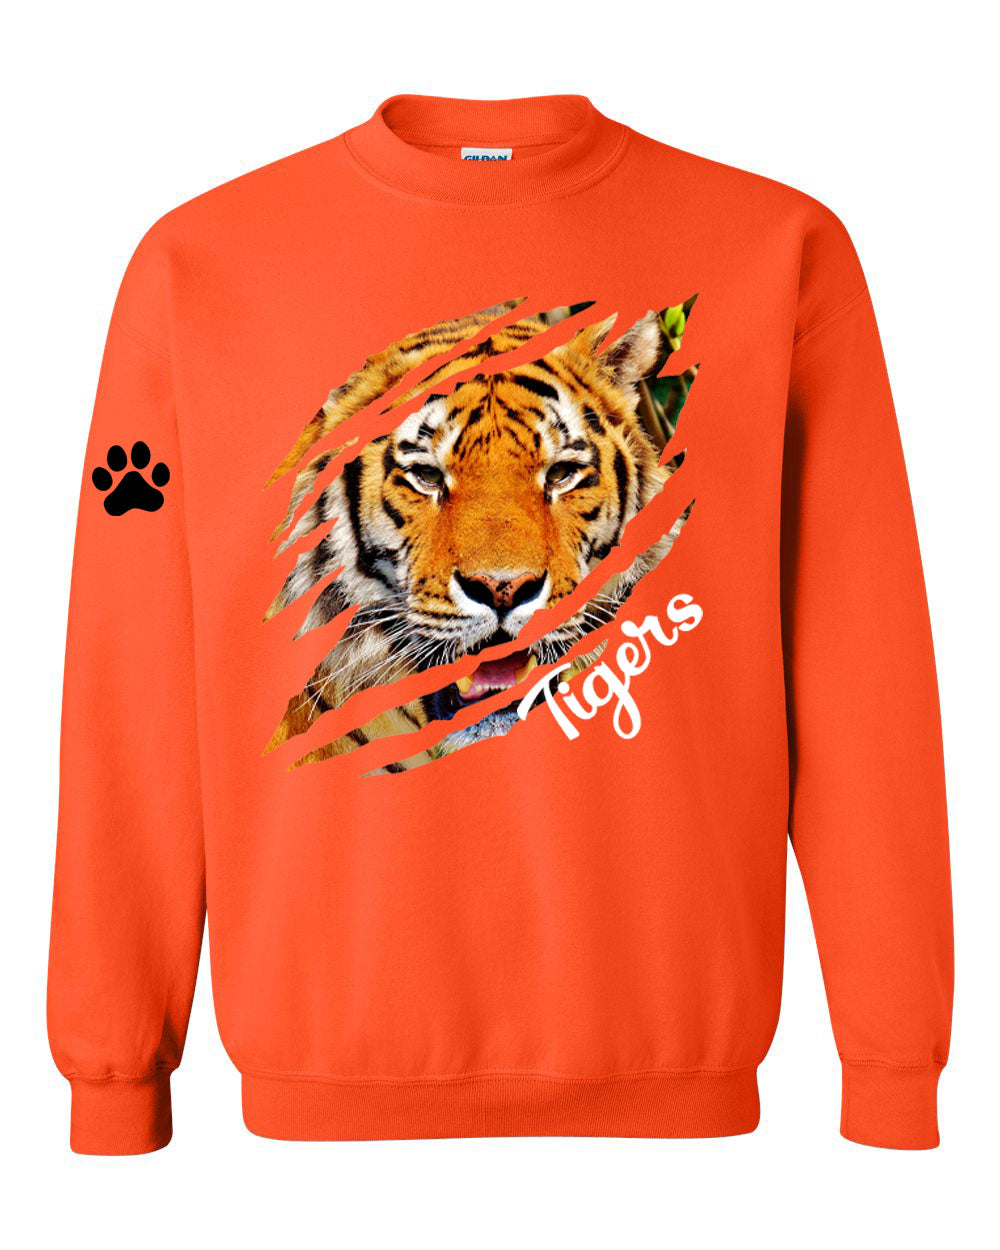 Lafayette Tigers Design 10 non hooded sweatshirt